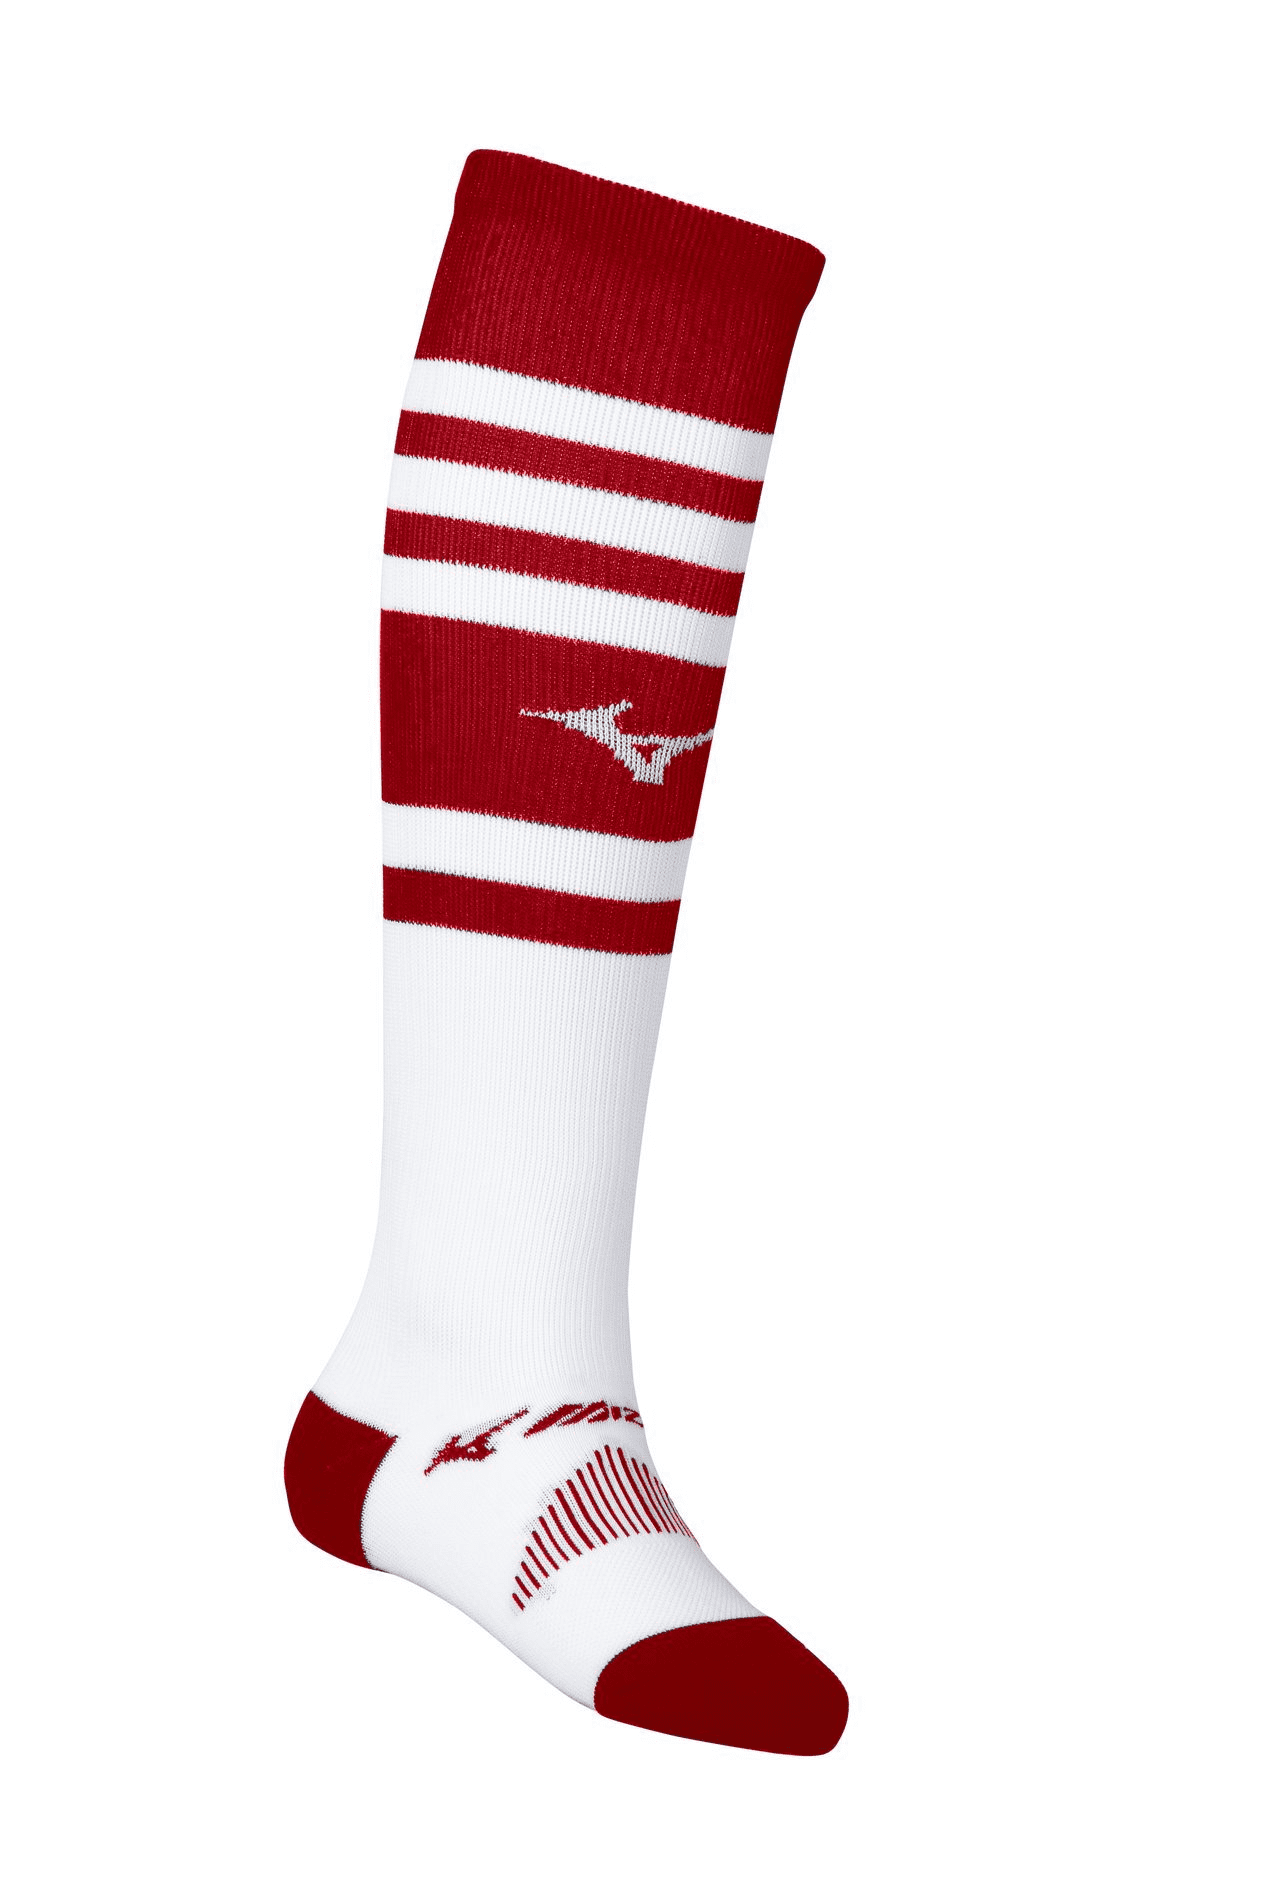 Mizuno Retro Performance Otc Sock, Size Small, Red (1010) - Walmart.com